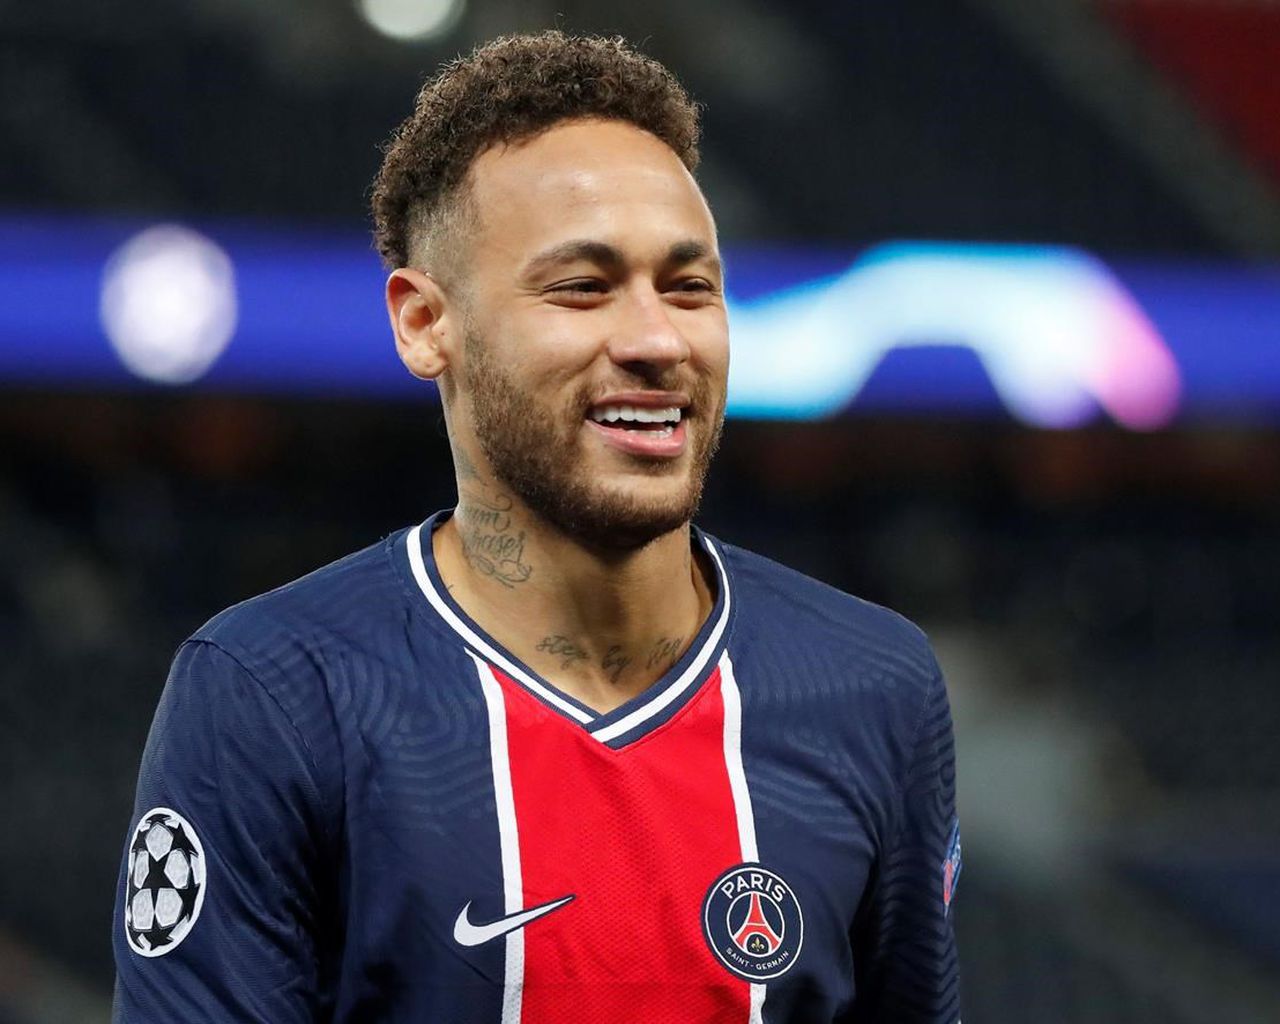 Neymar calls PSG “home” amid contract extension talks